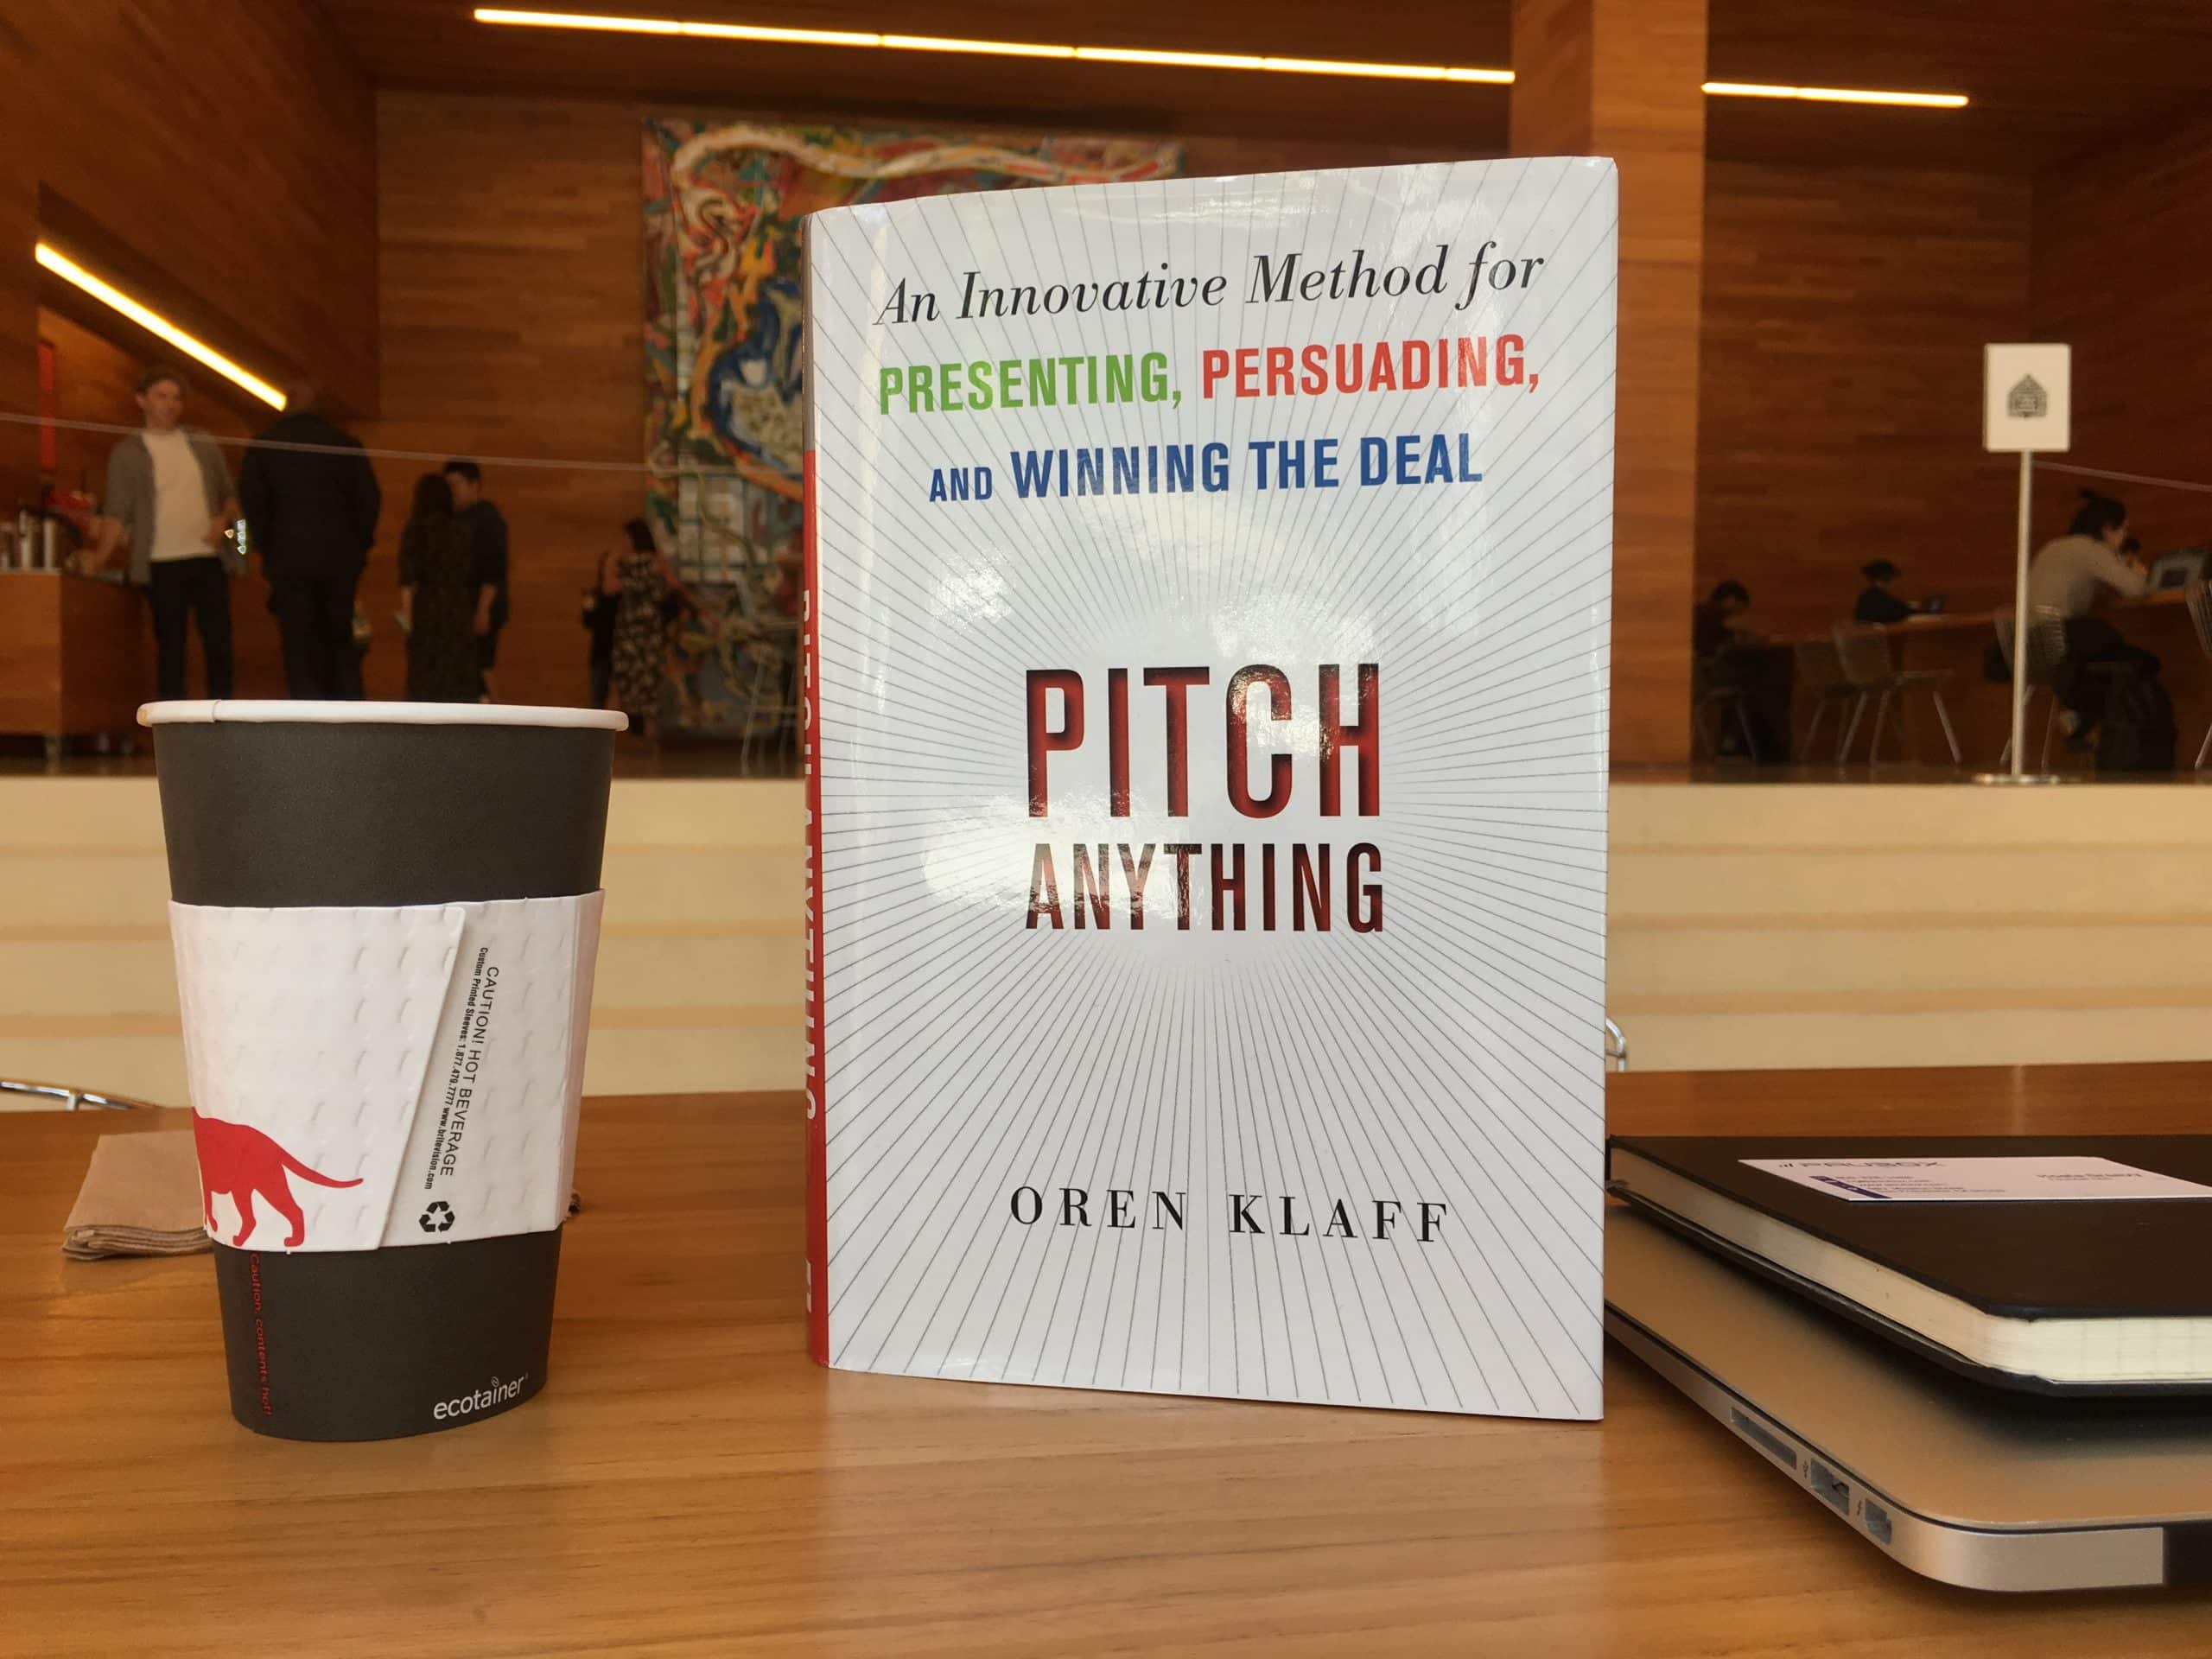 Pitch Anything by Oren Klaff: My takeaways